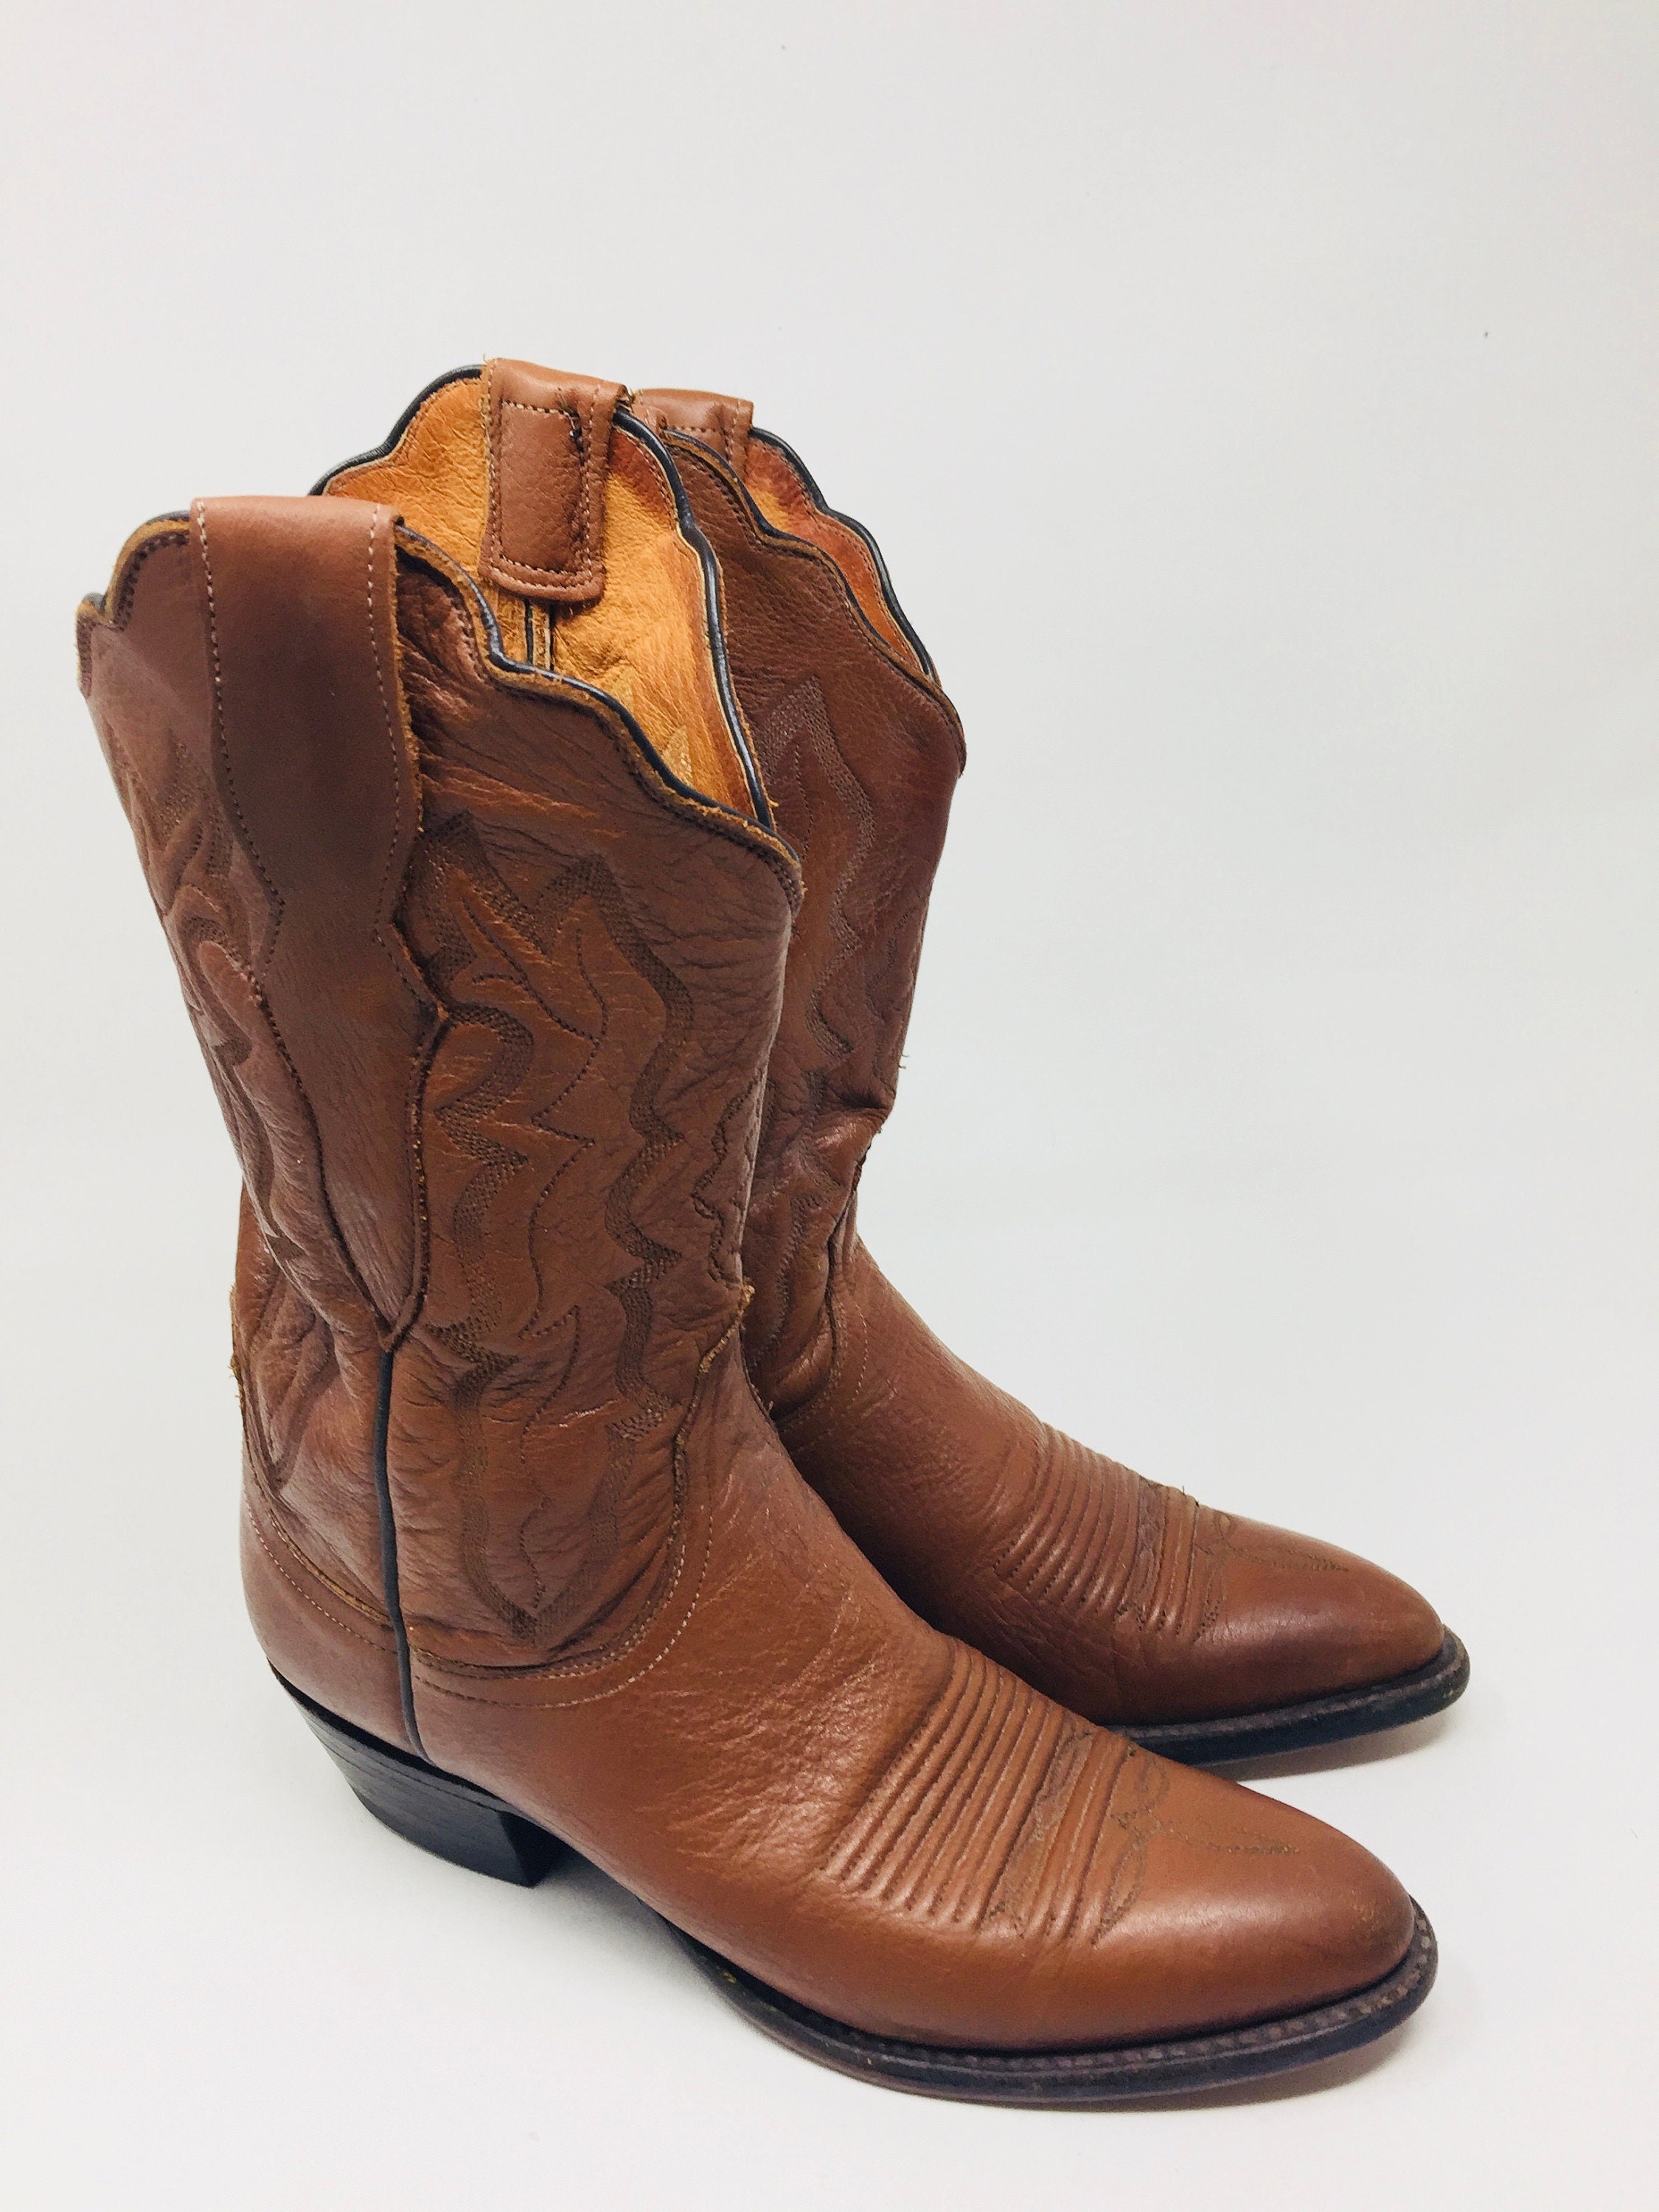 handmade cowboy boots uk